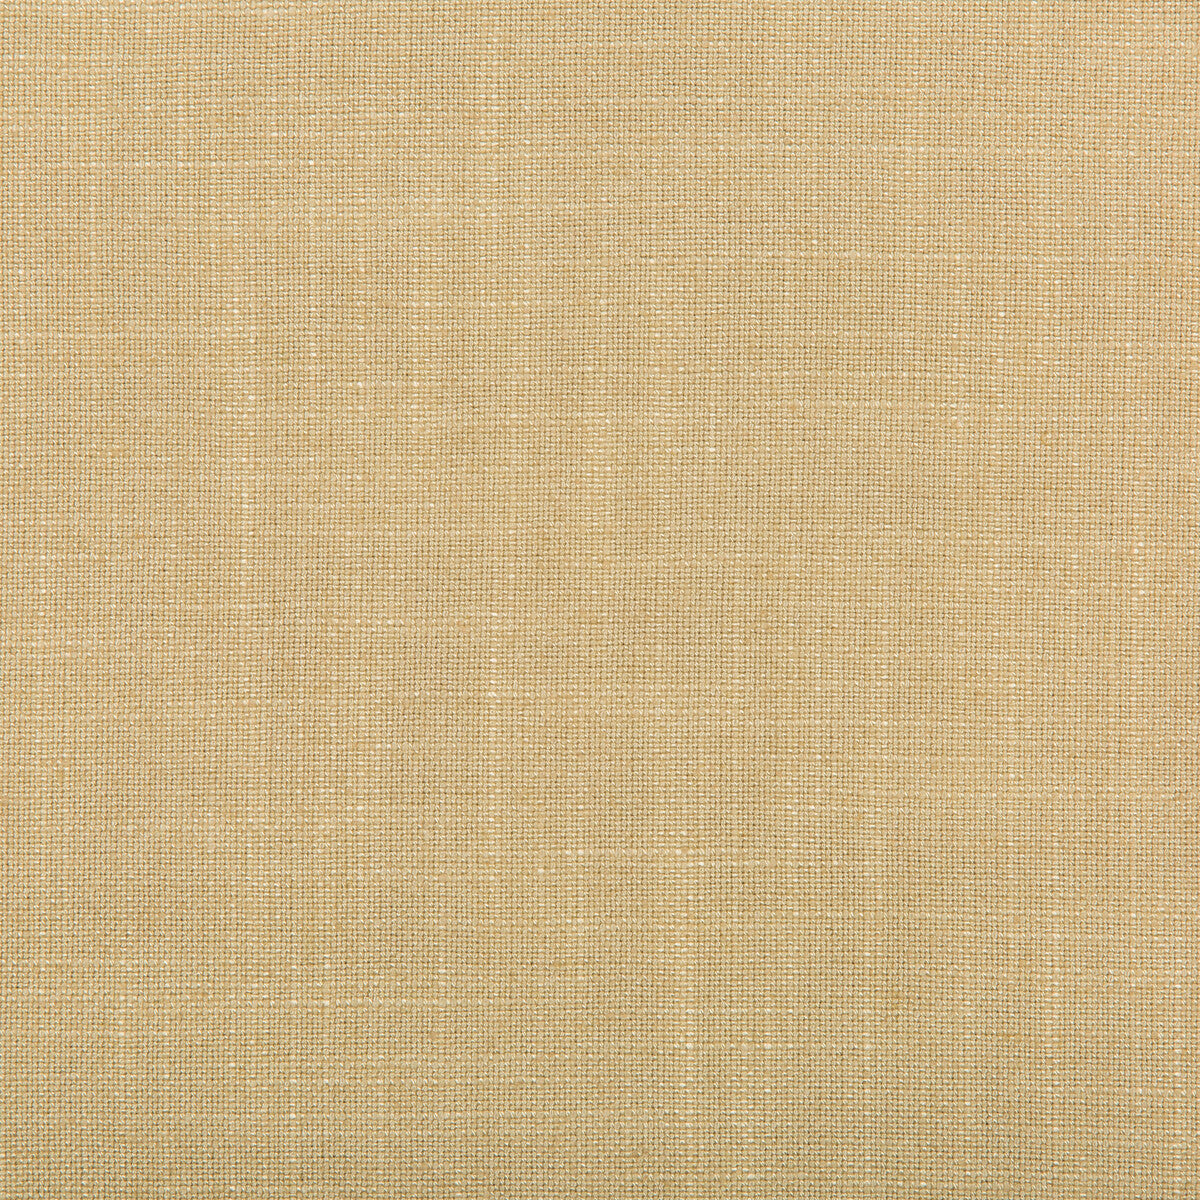 Aura fabric in cream color - pattern 35520.1601.0 - by Kravet Design